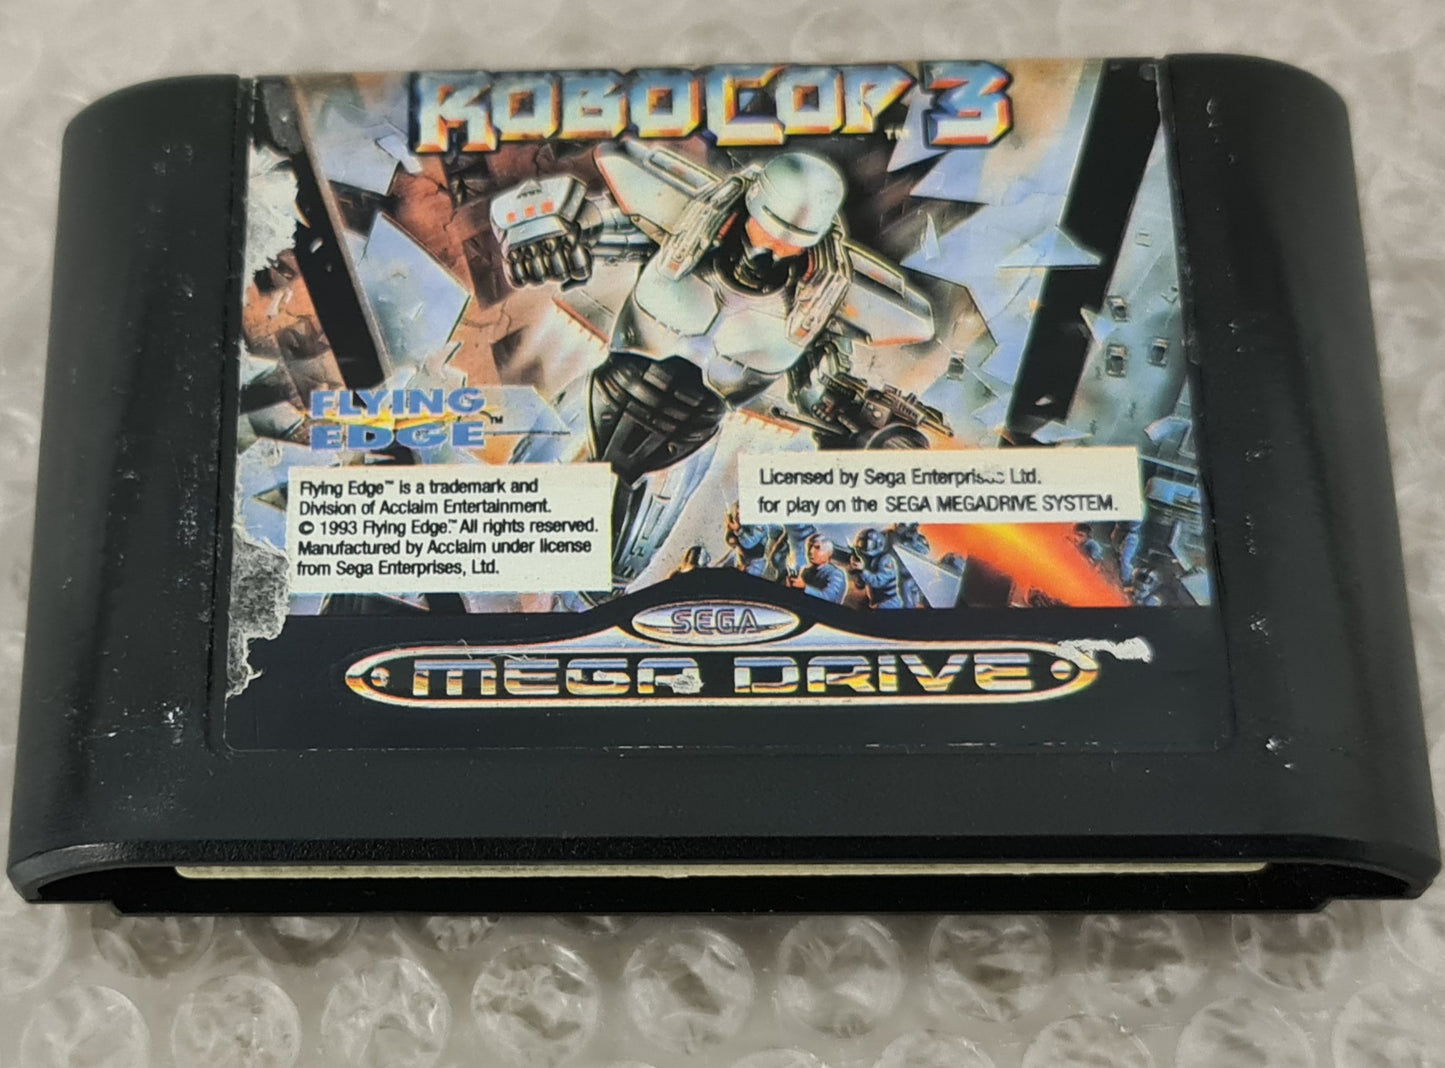 Robocop 3 Sega Mega Drive RARE Game Cartridge Only